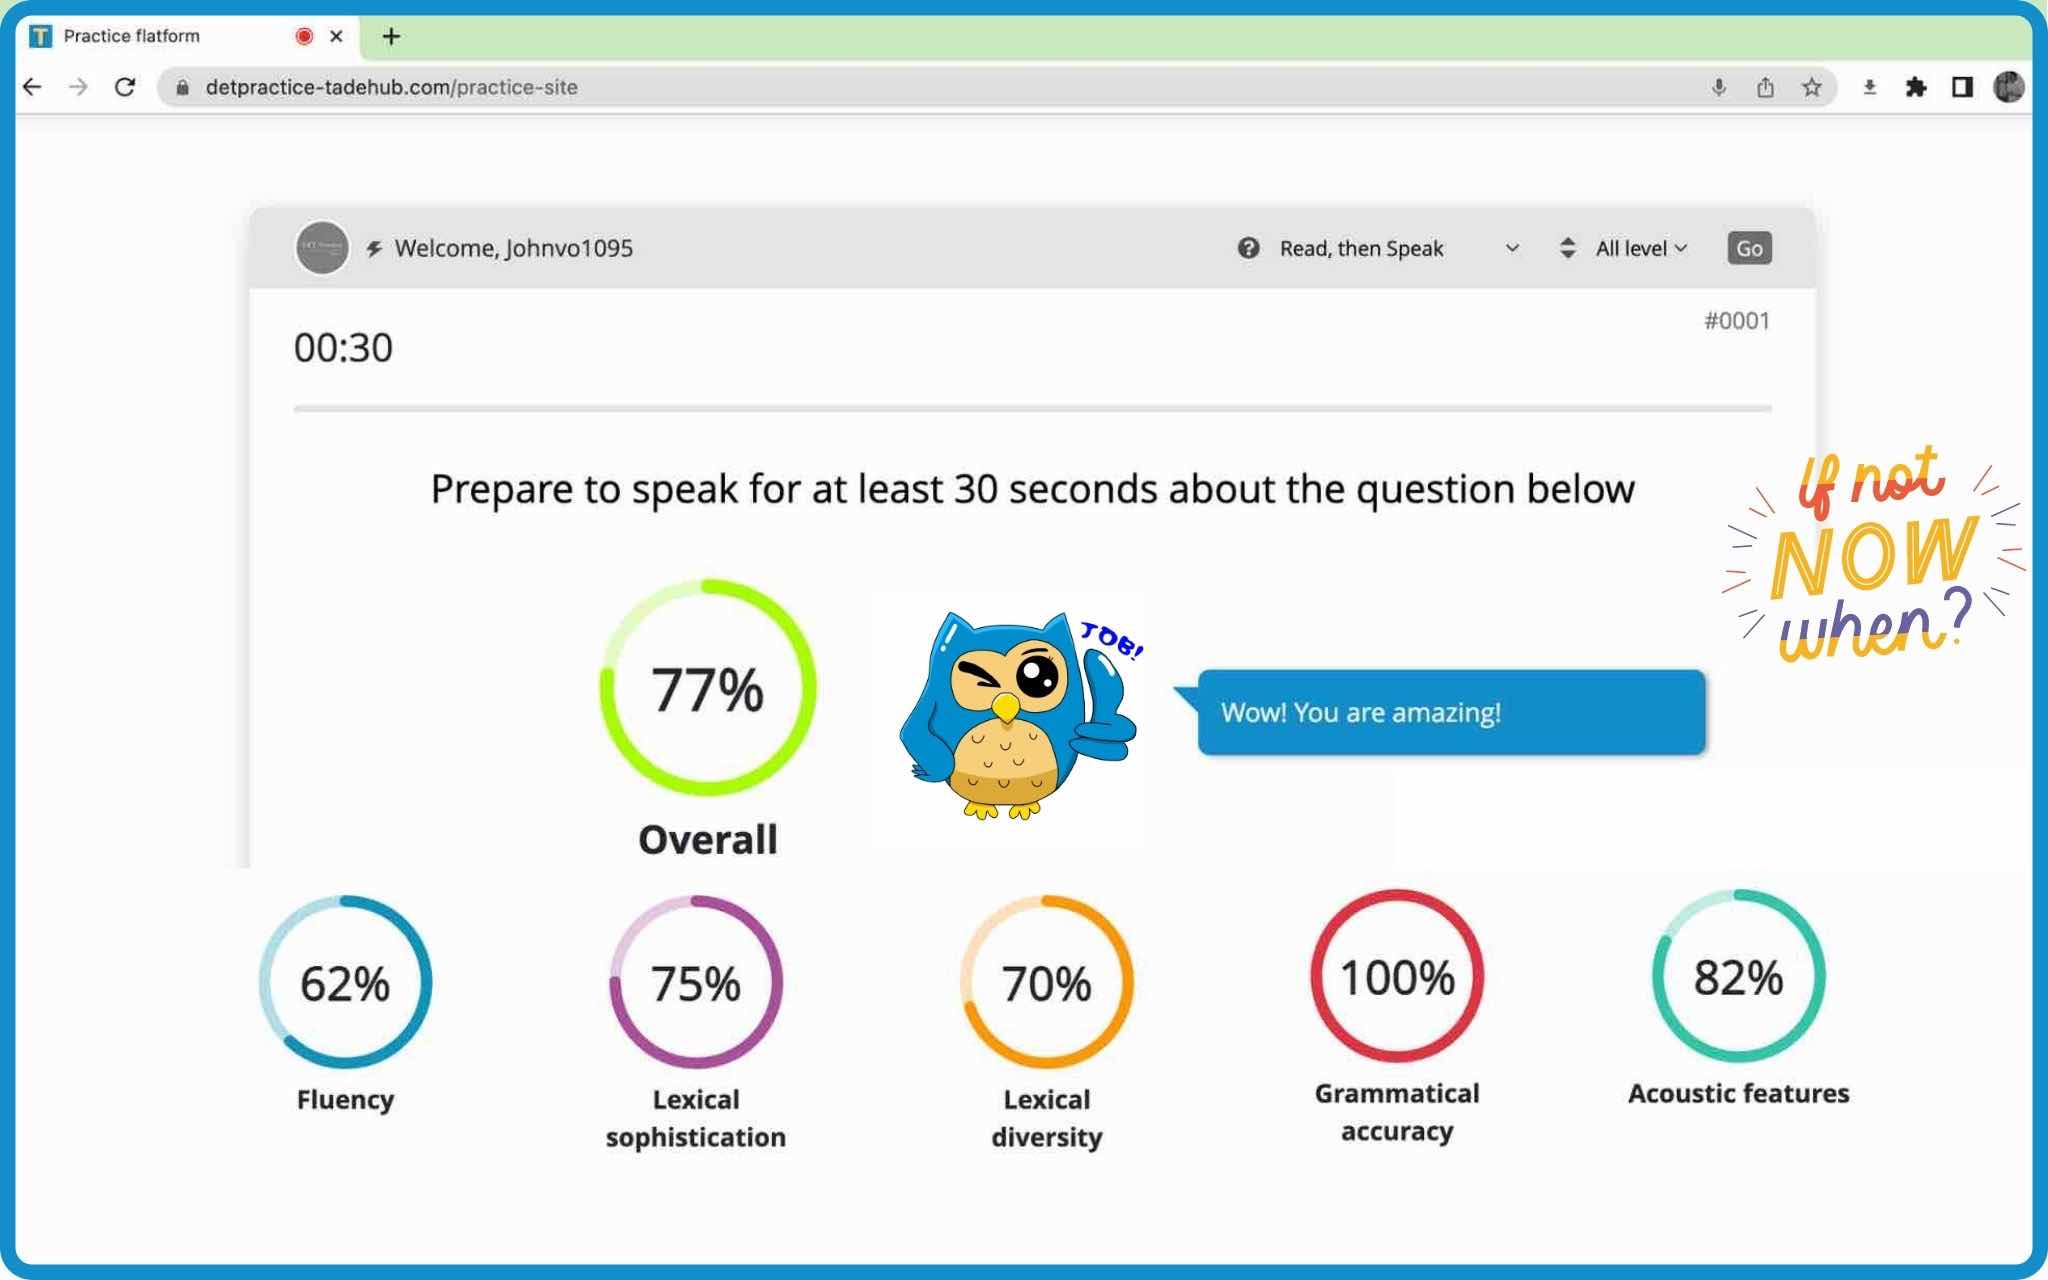 duoling grading aspects, det practice platform, Duolingo Test preparation, grading aspects, acoustic features feedback